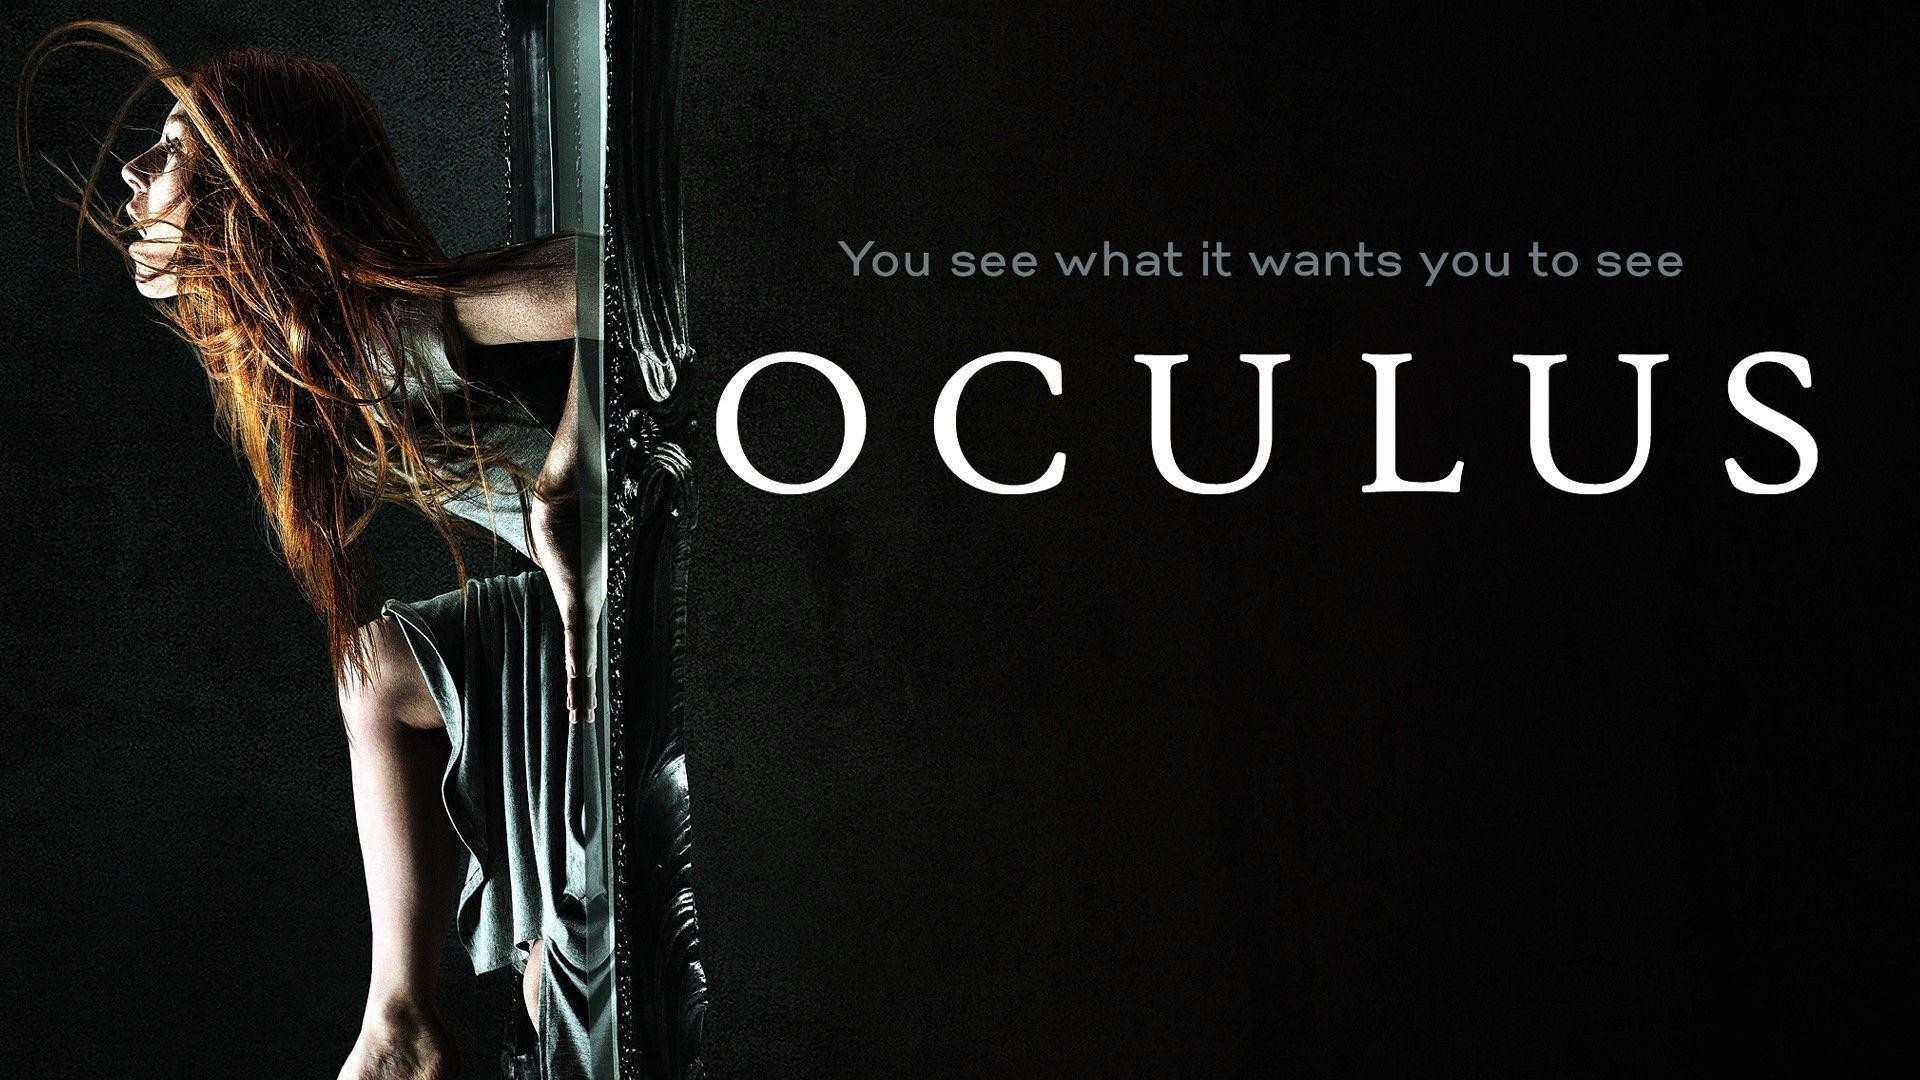 1920x1080 New Oculus 2014 Horror Movie Poster Wallpaper HD for Desktop .